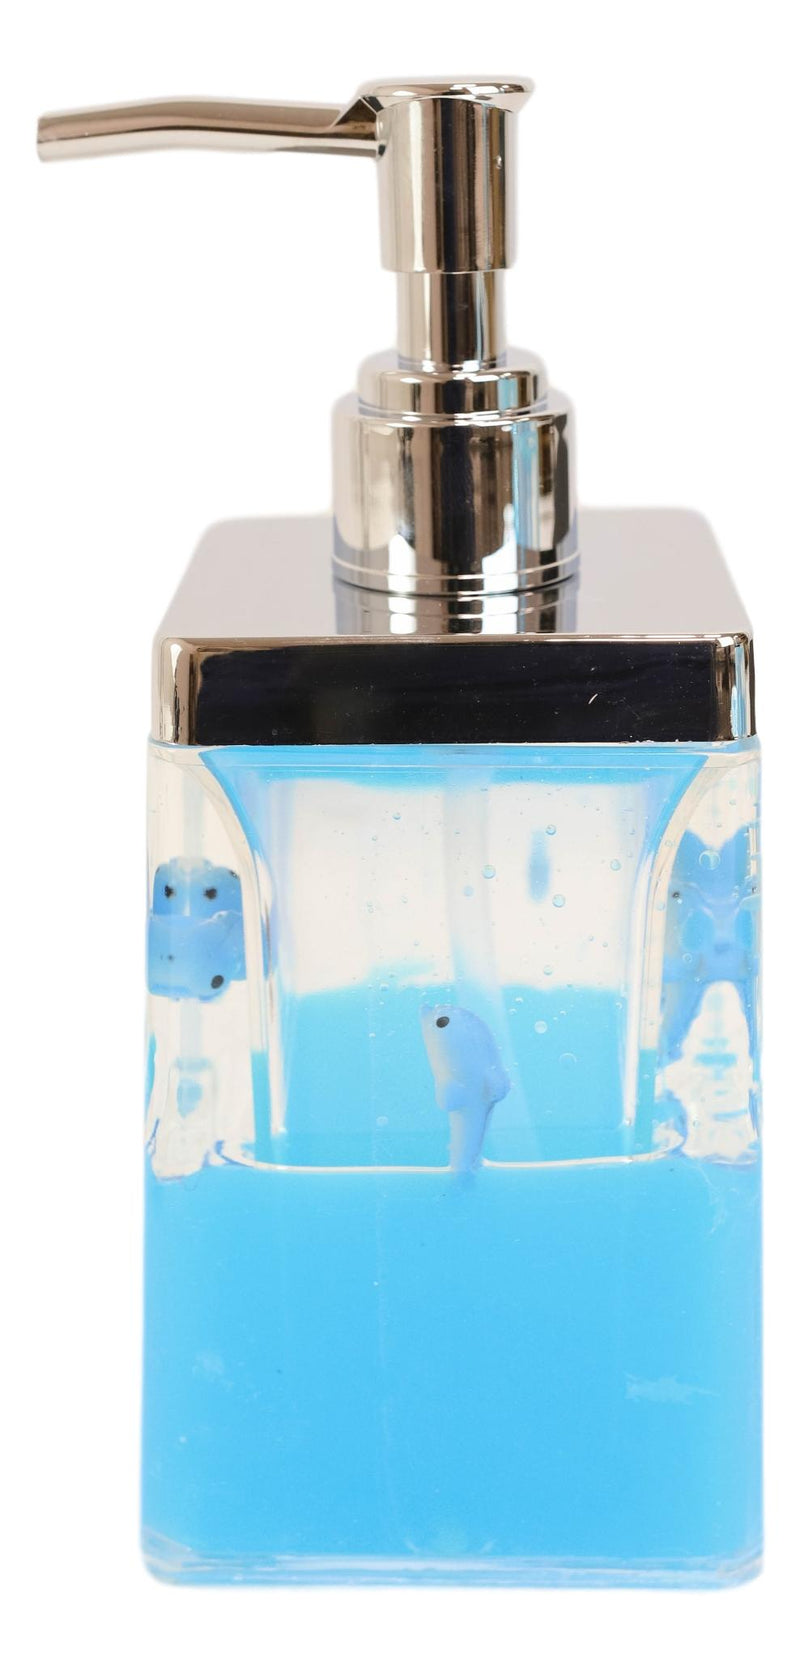 Nautical Marine Blue Dolphins 5 Piece Chic Bathroom Vanity Accessories Gift Set